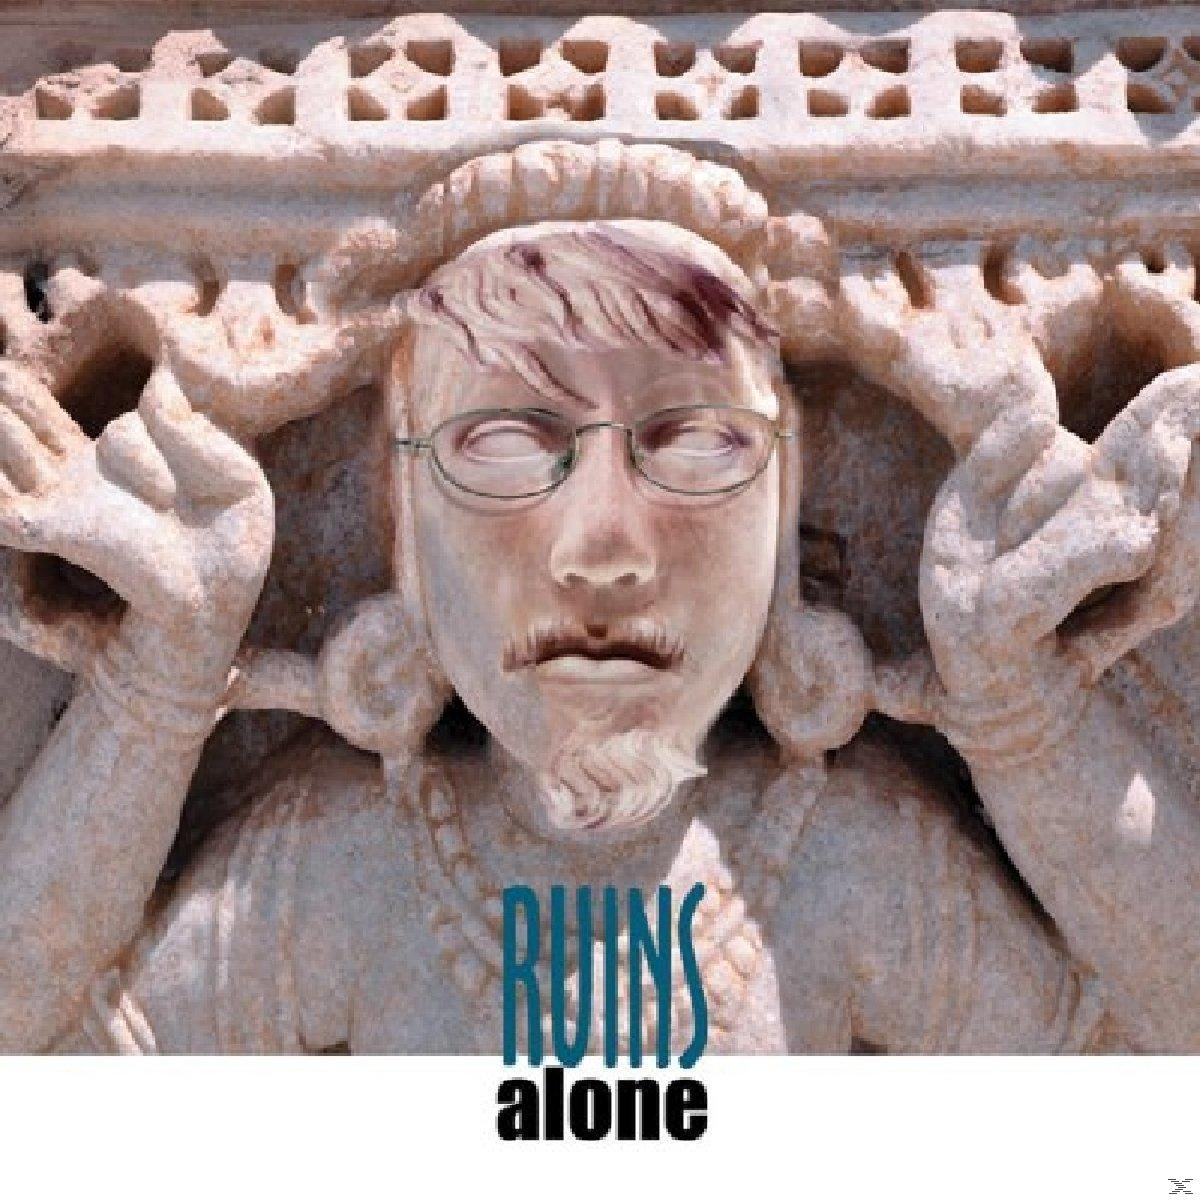 Ruins Alone - Ruins - (CD) Alone